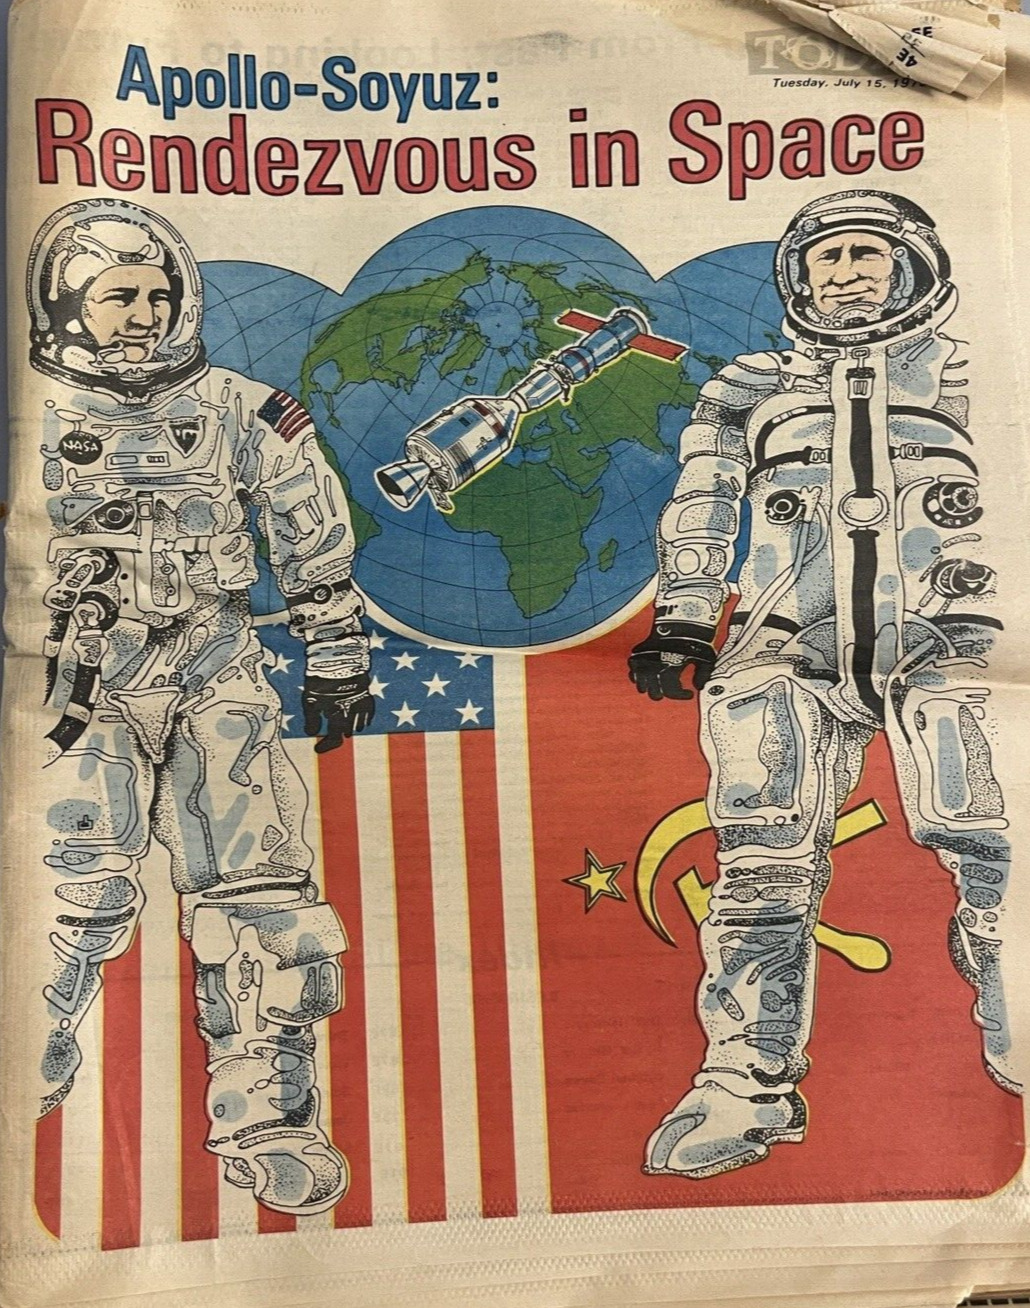 Florida Today Newspaper July 15 1975 Apollo Soyuz Rendezvous in Space NASA